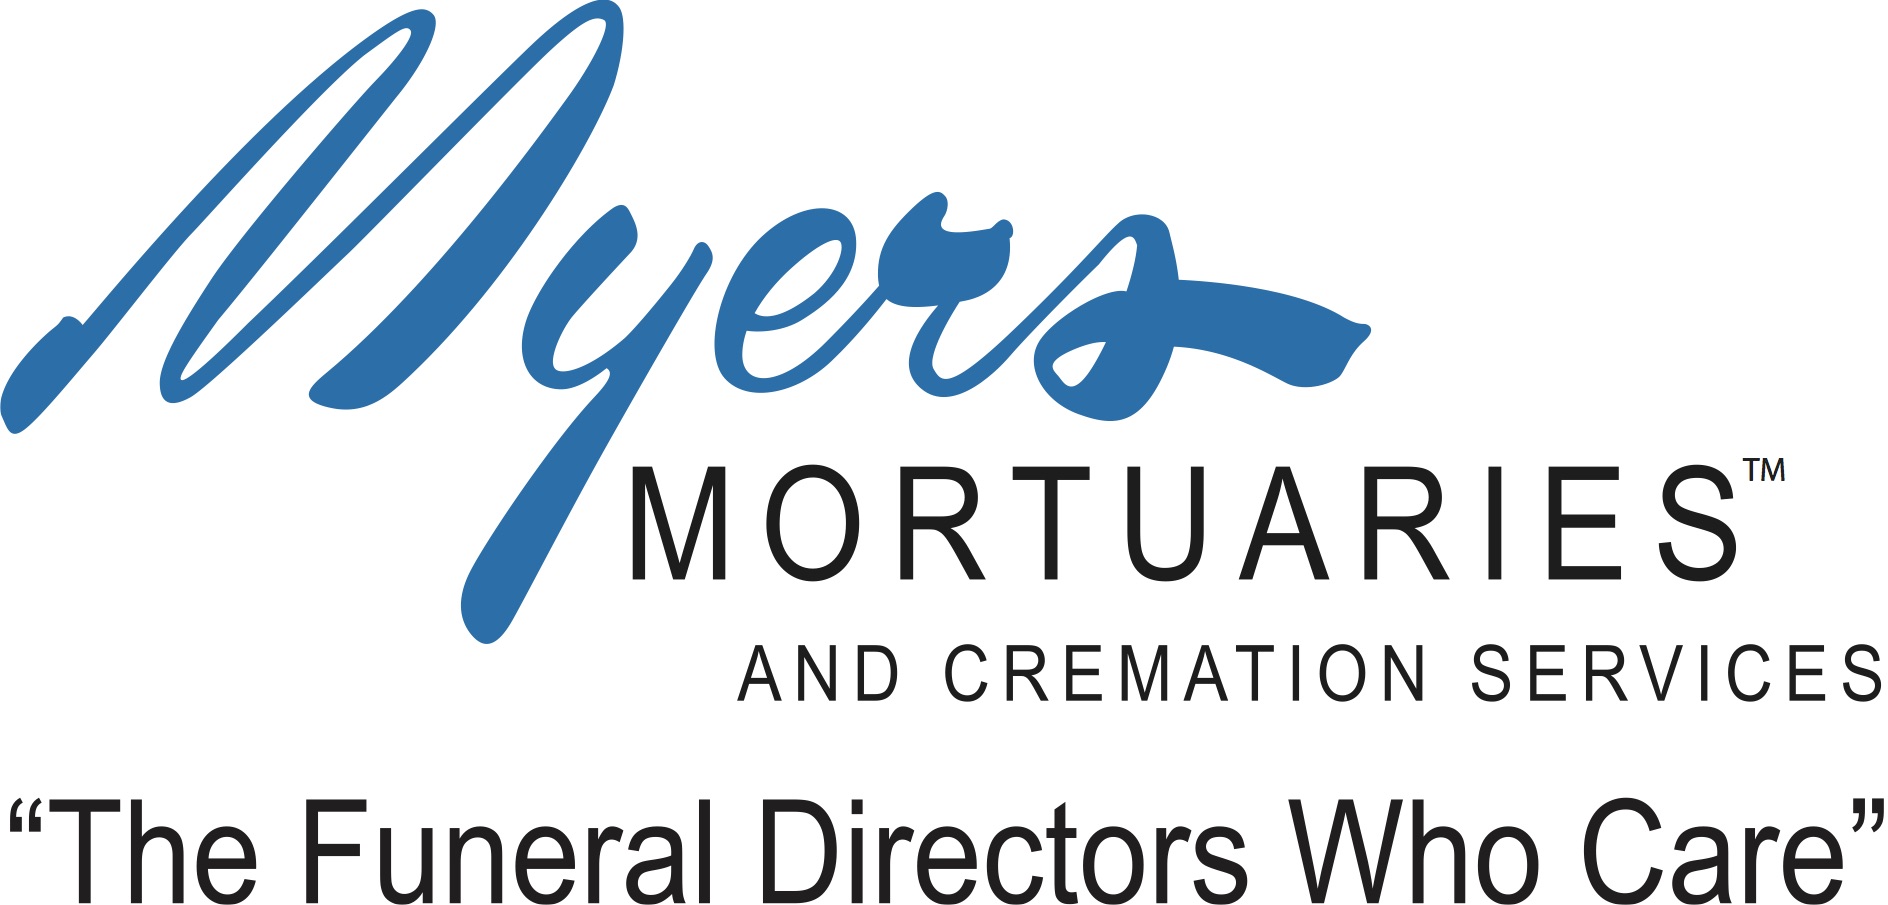 Myer Mortuaries Logo With Tm